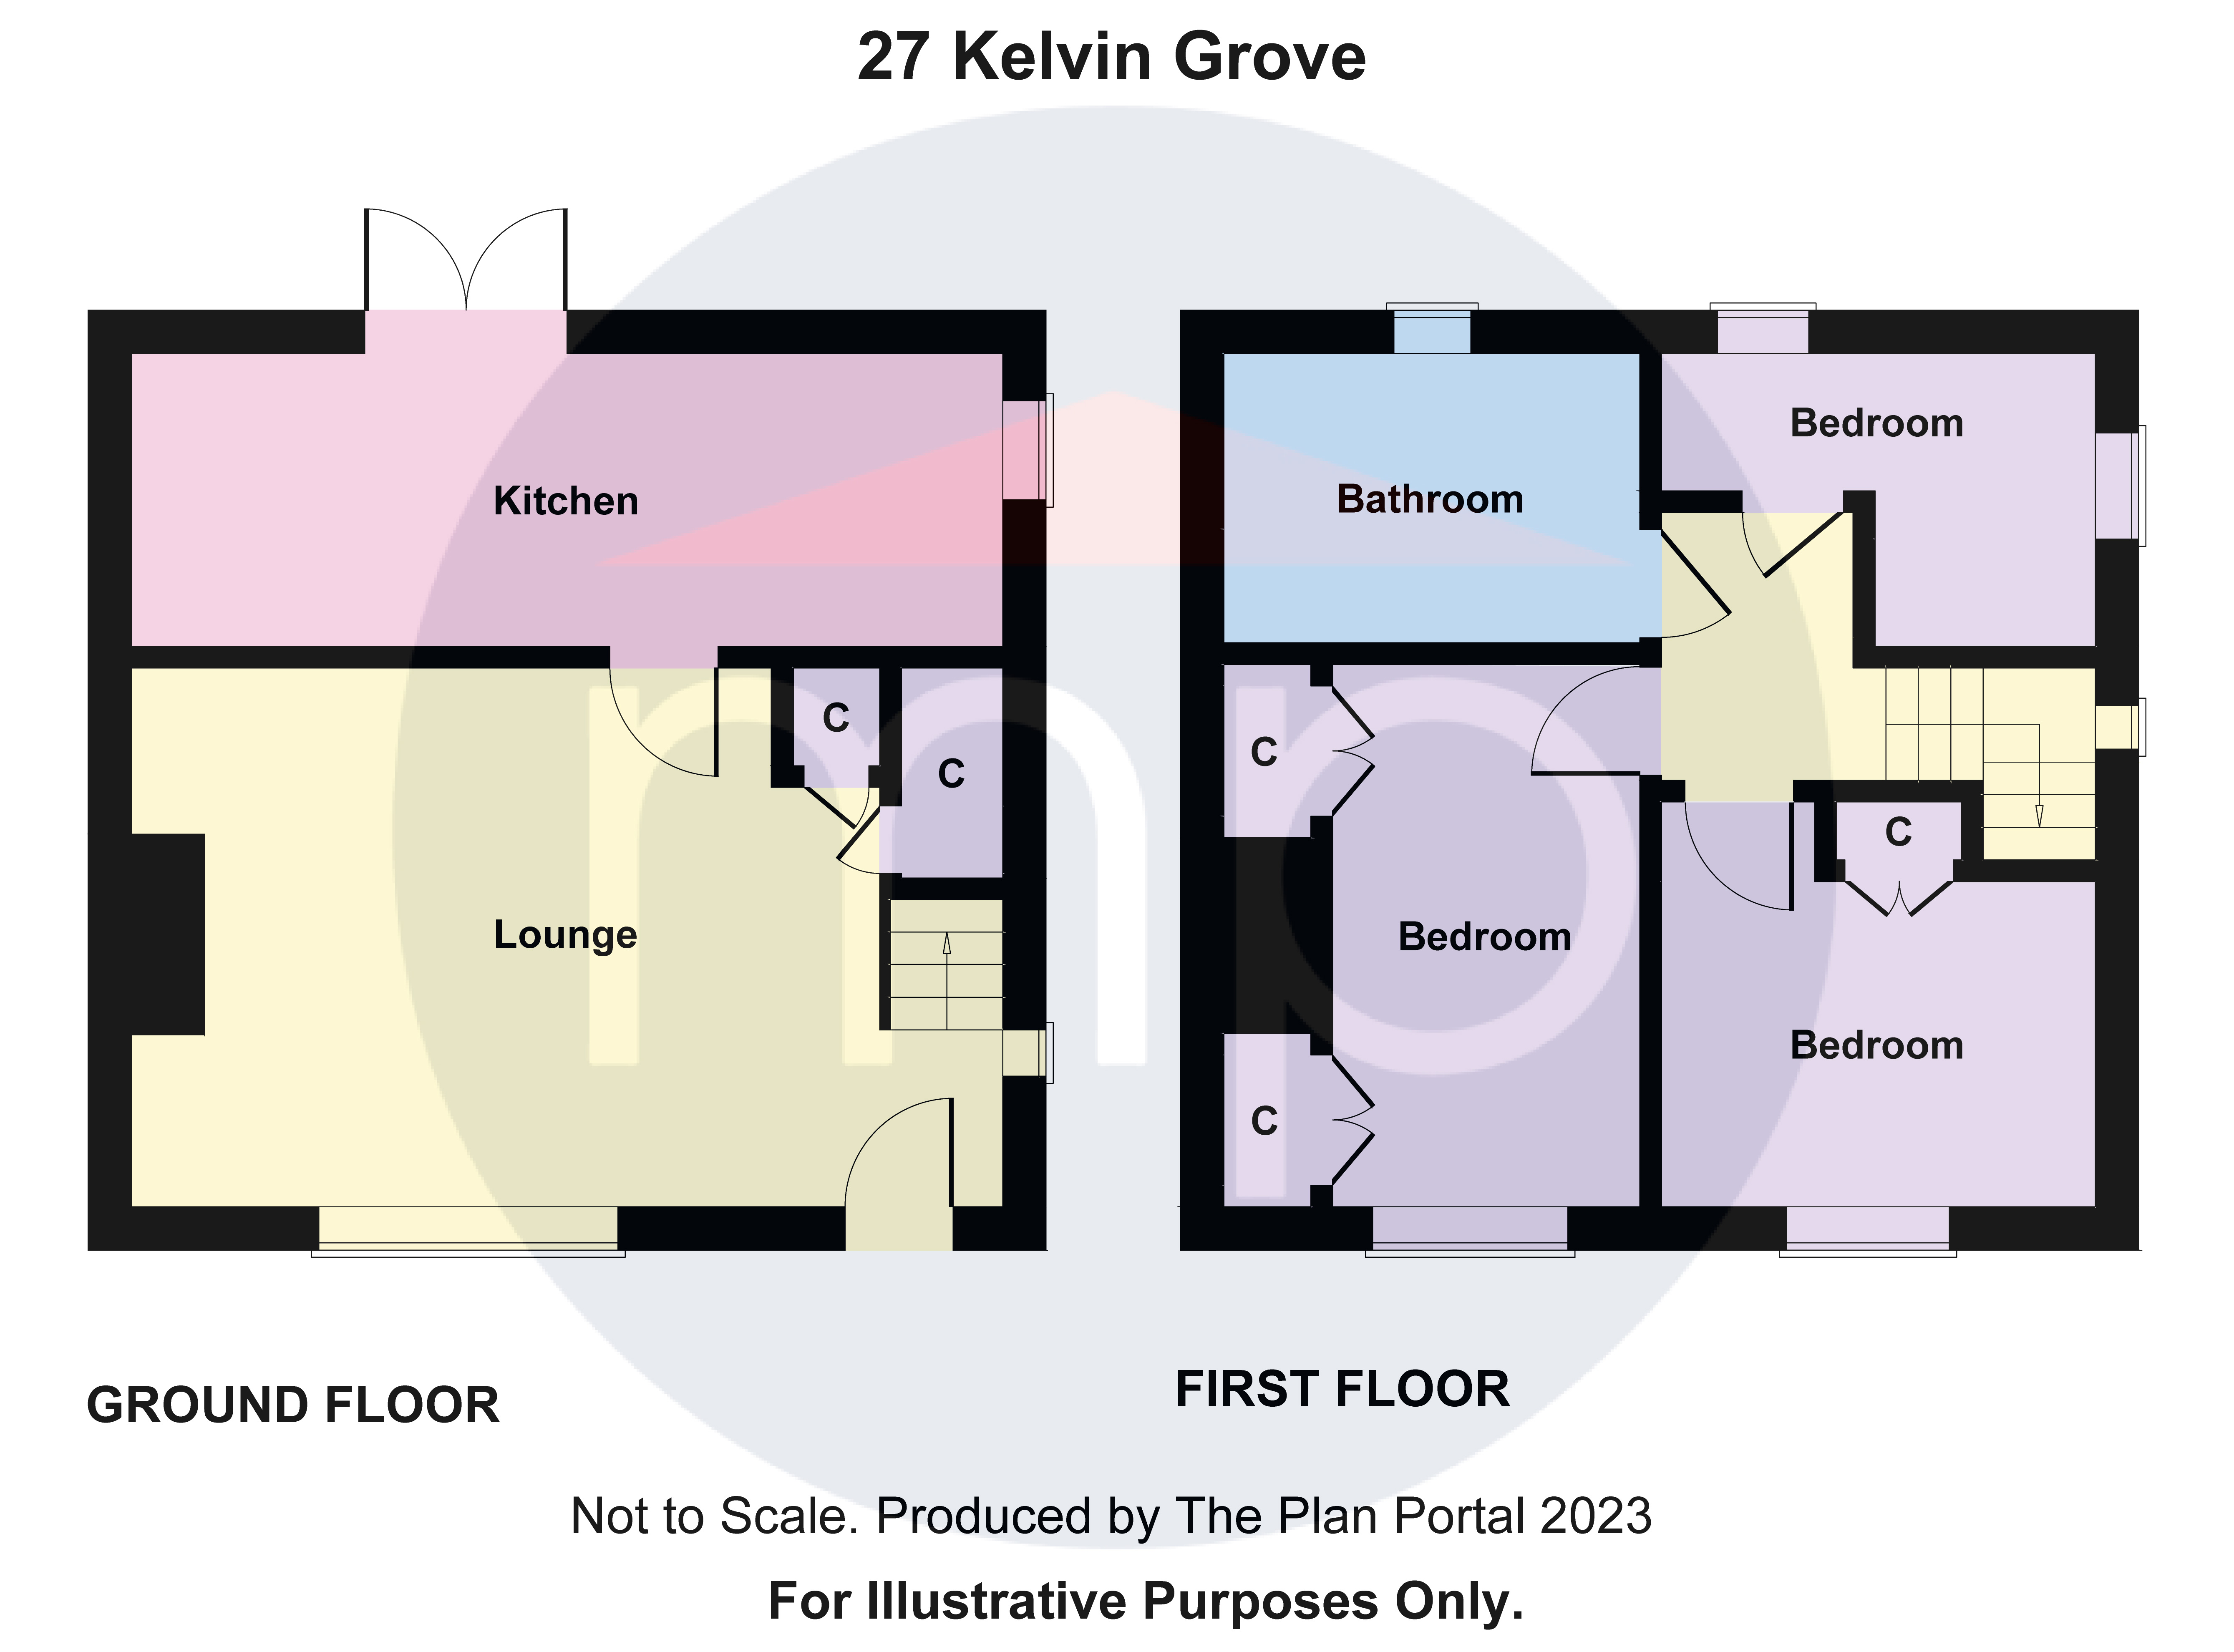 3 bed  for sale in Kelvin Grove, Park End - Property floorplan